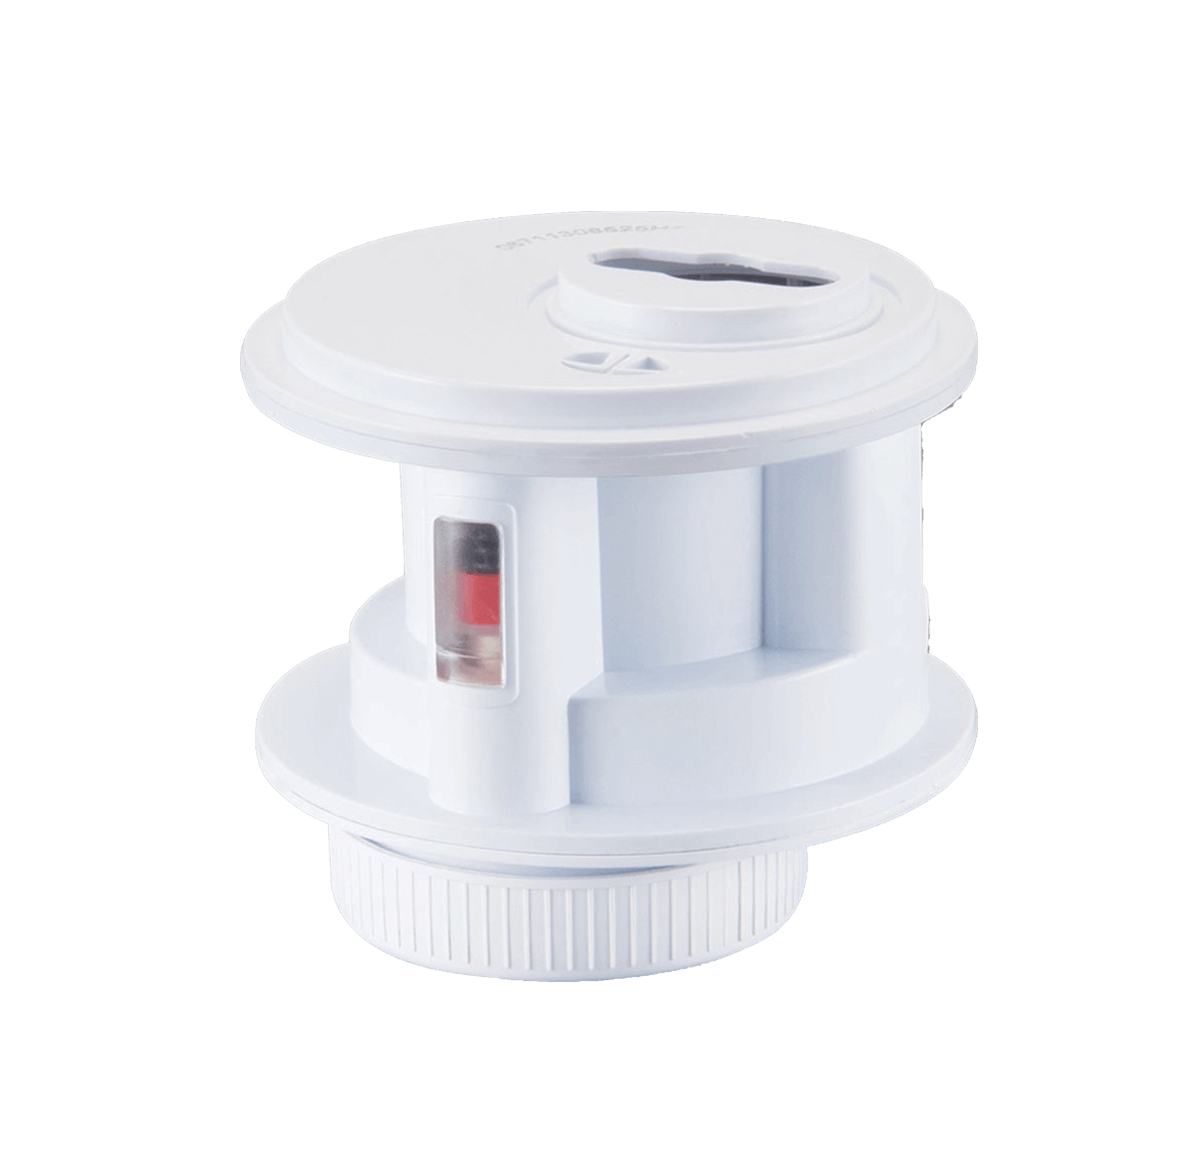 Tata Swach Water Purifier Bulb 3000 ltr